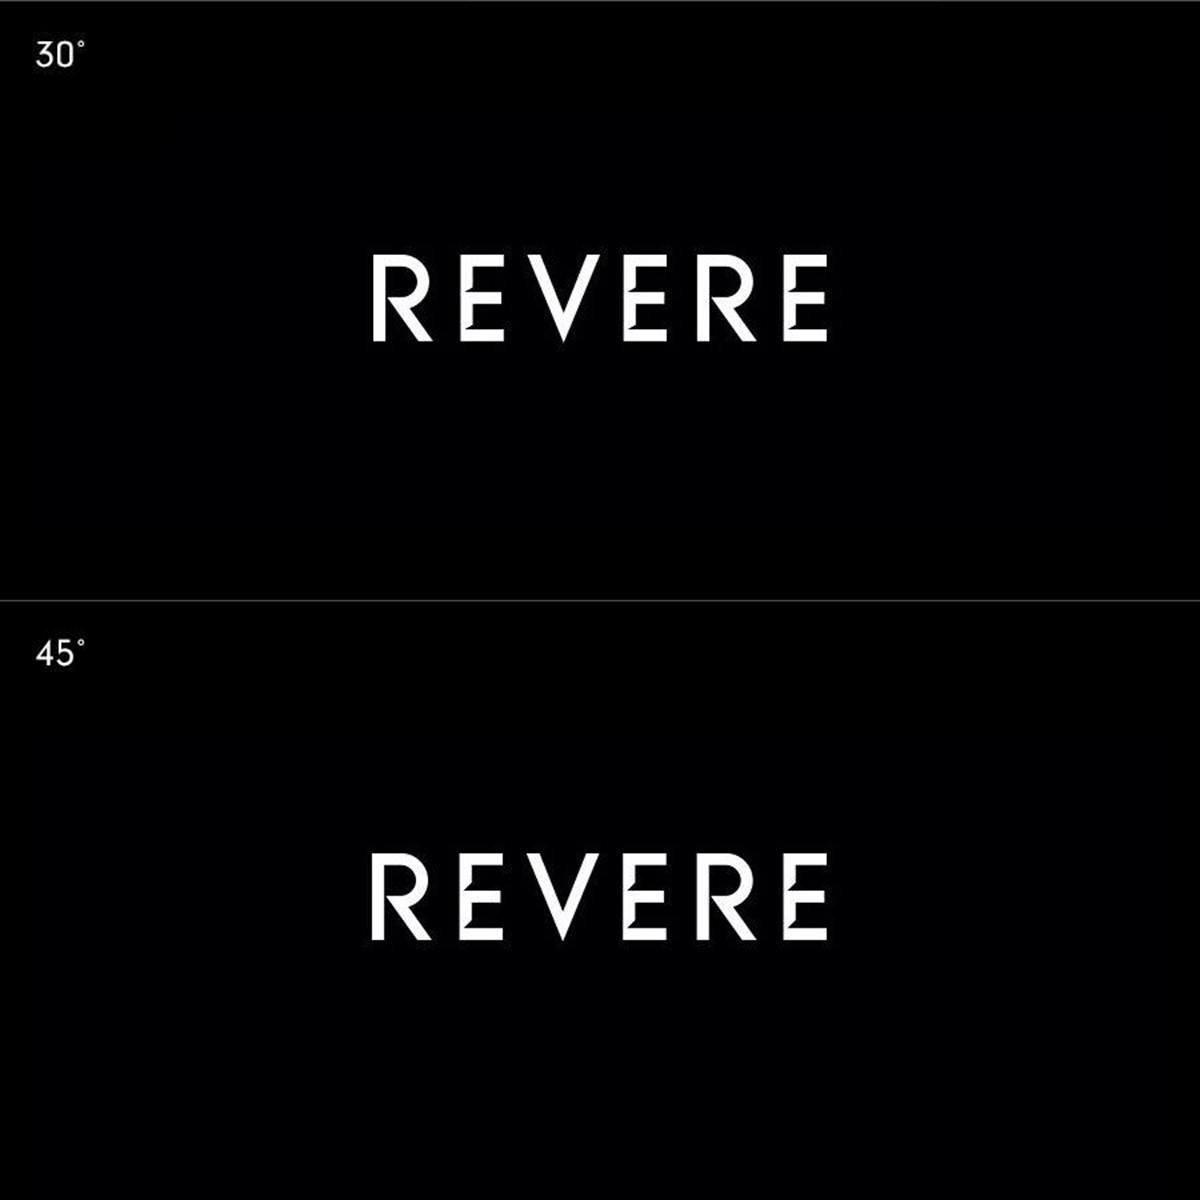 Revere. Heavy logotypes. Brand identity design by Superfried. Manchester.